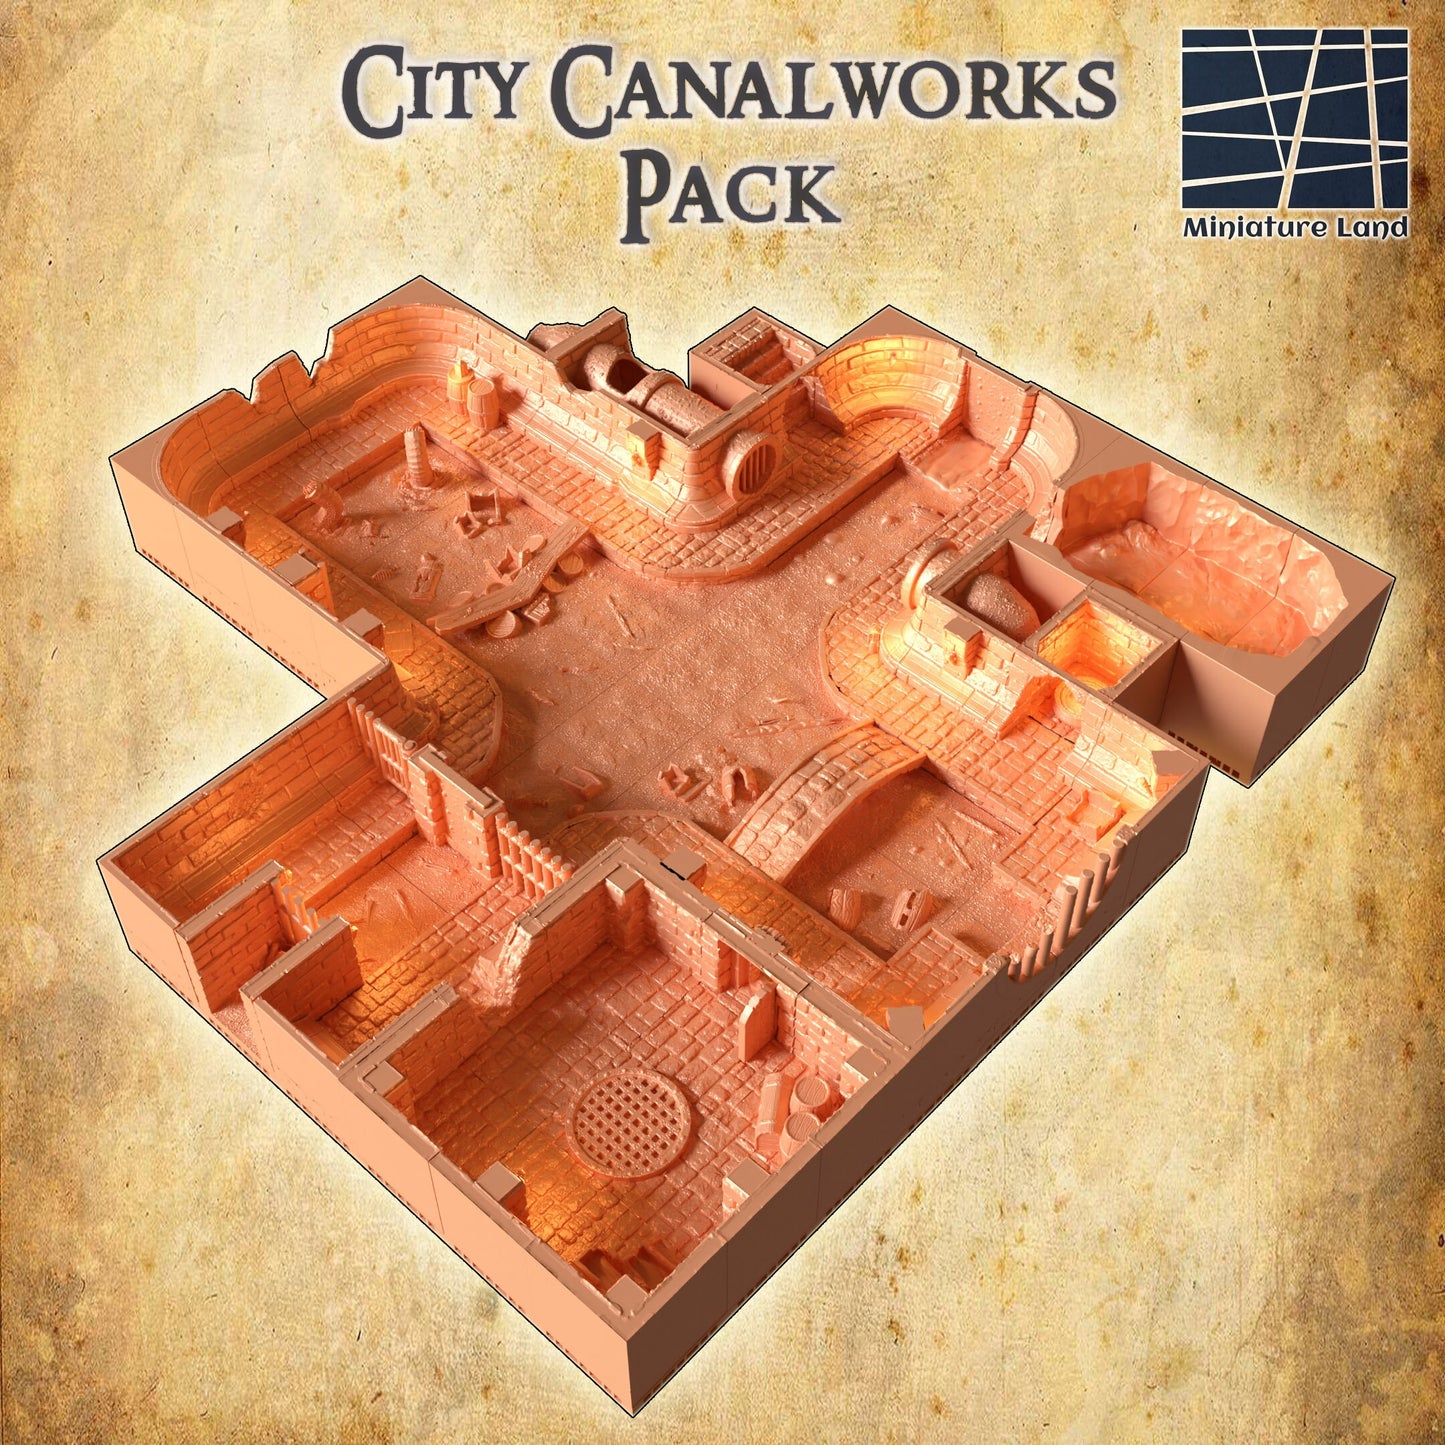 Modular City Canal works, sewer system, underground terrain